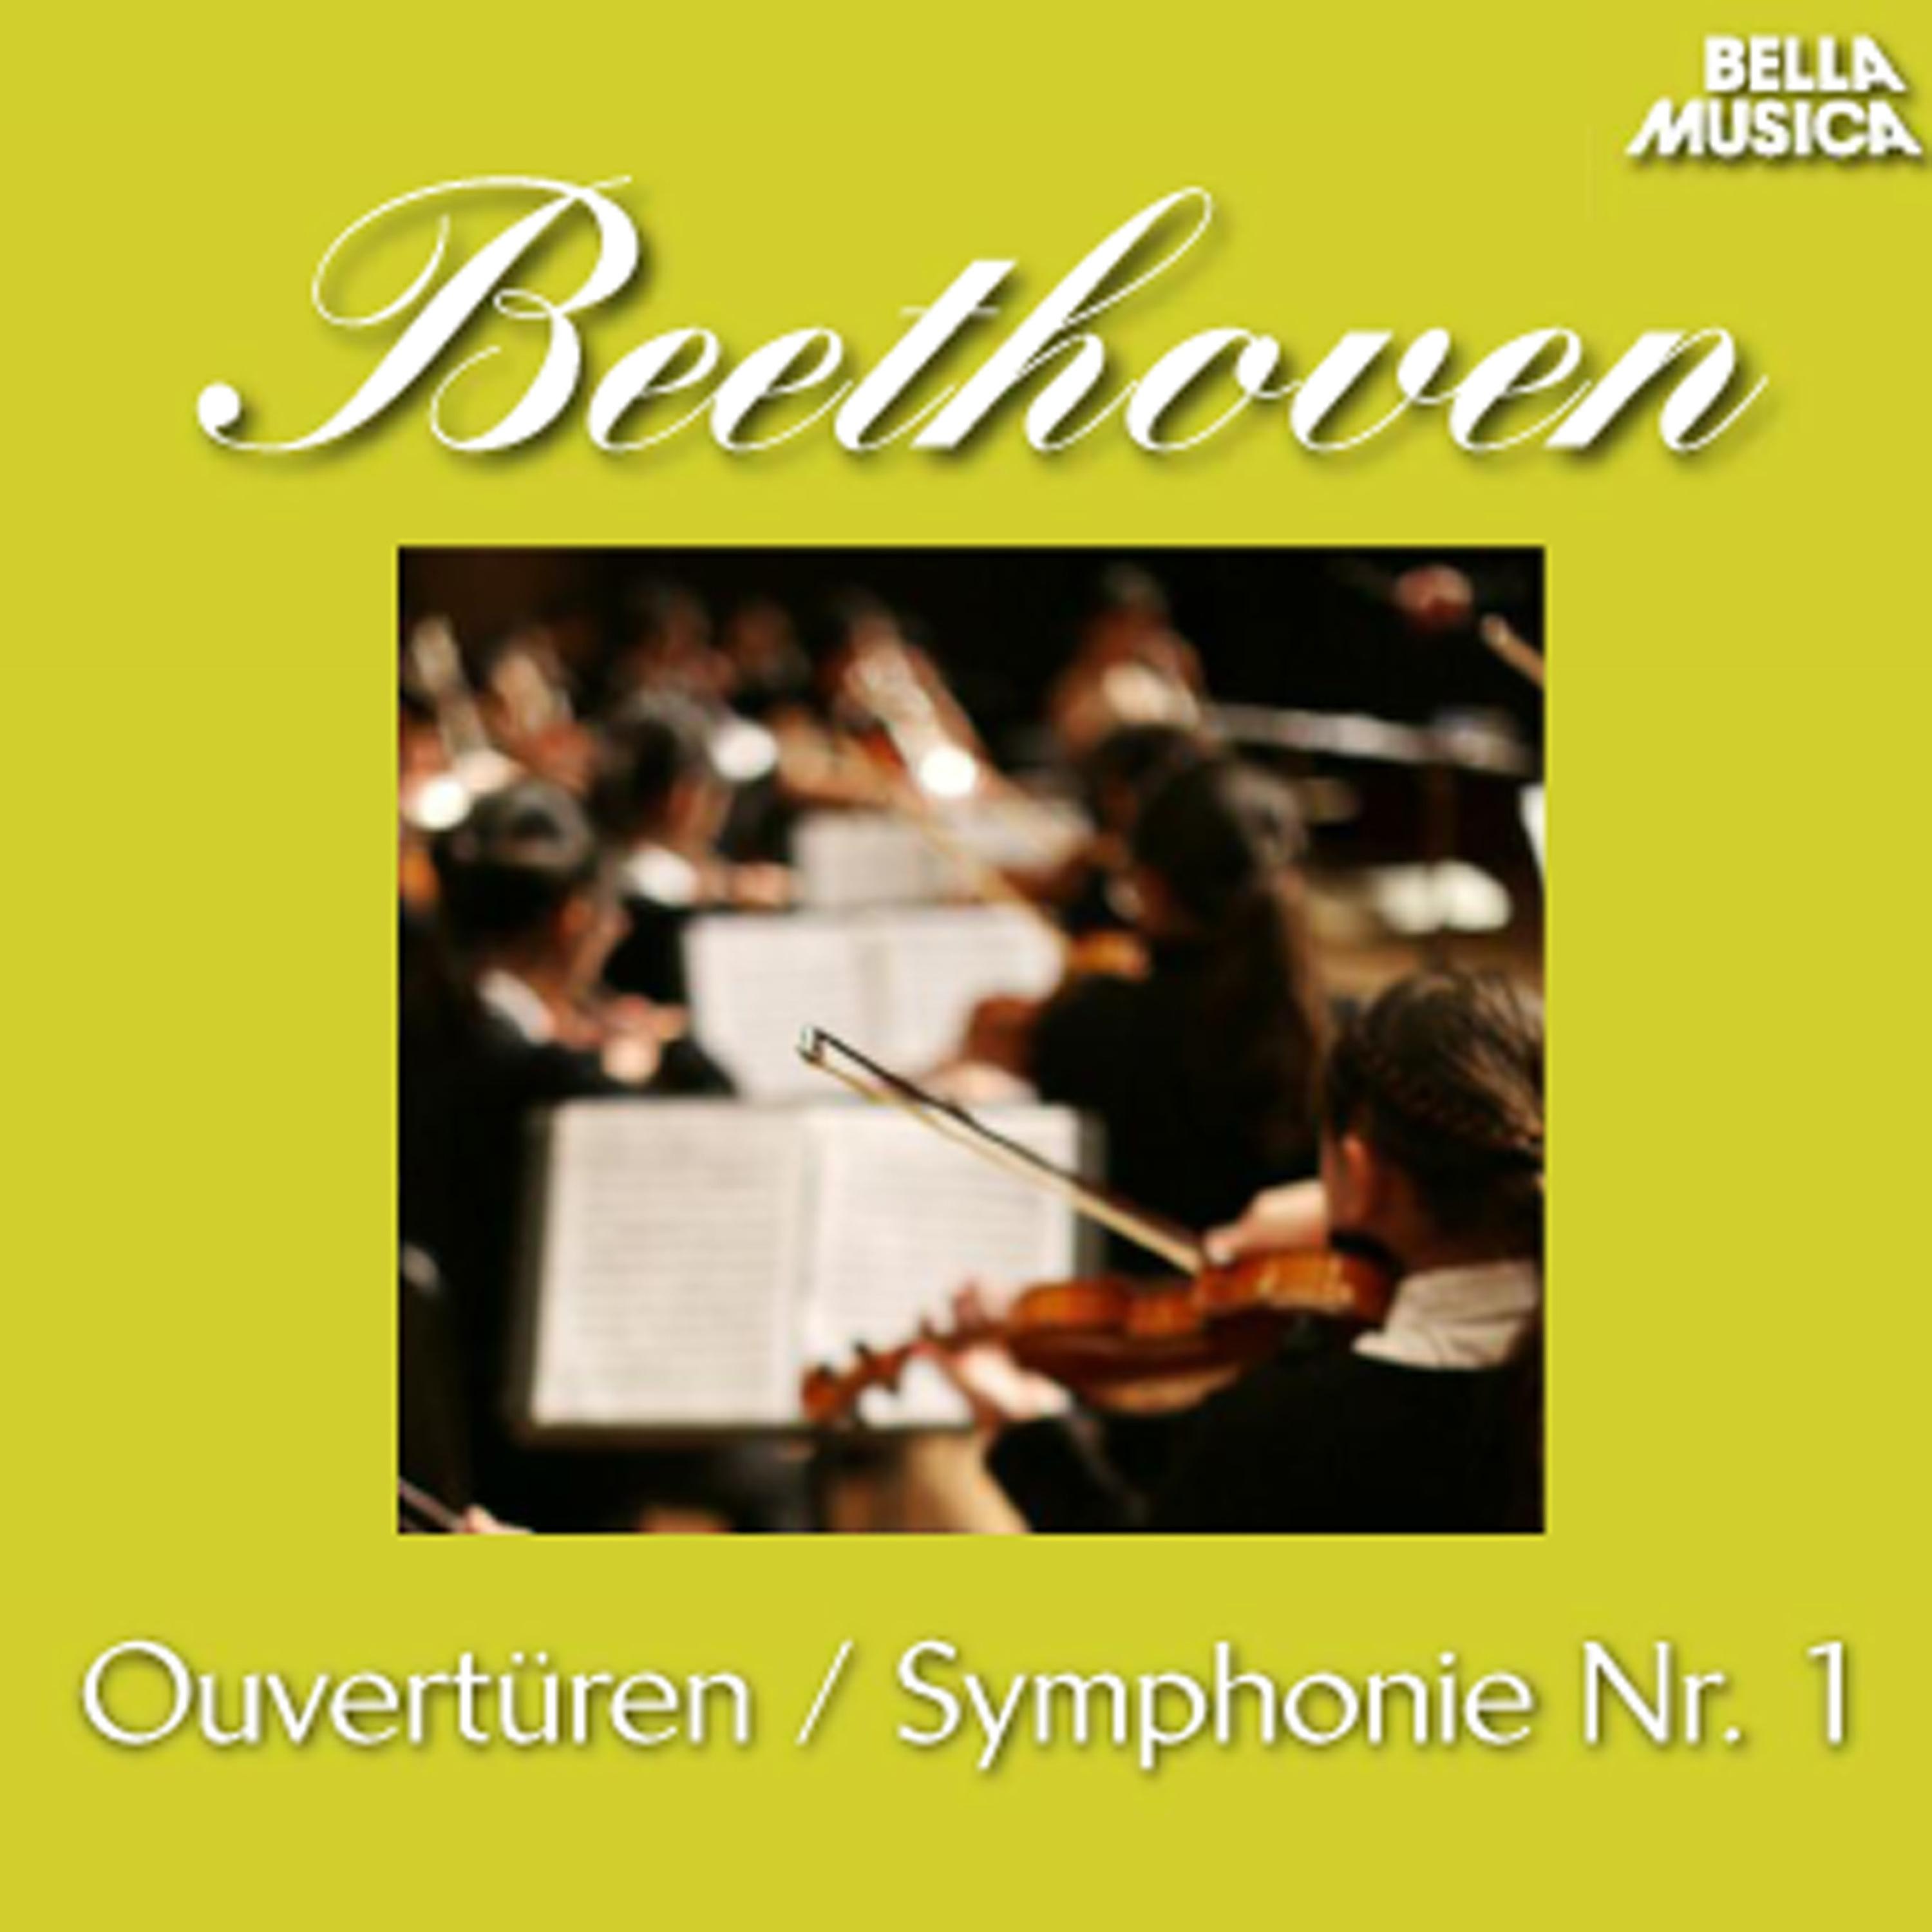 Sinfonie No. 1 fü r Orchester in C Major, Op. 21: I. Adagio molto  Allegro con brio